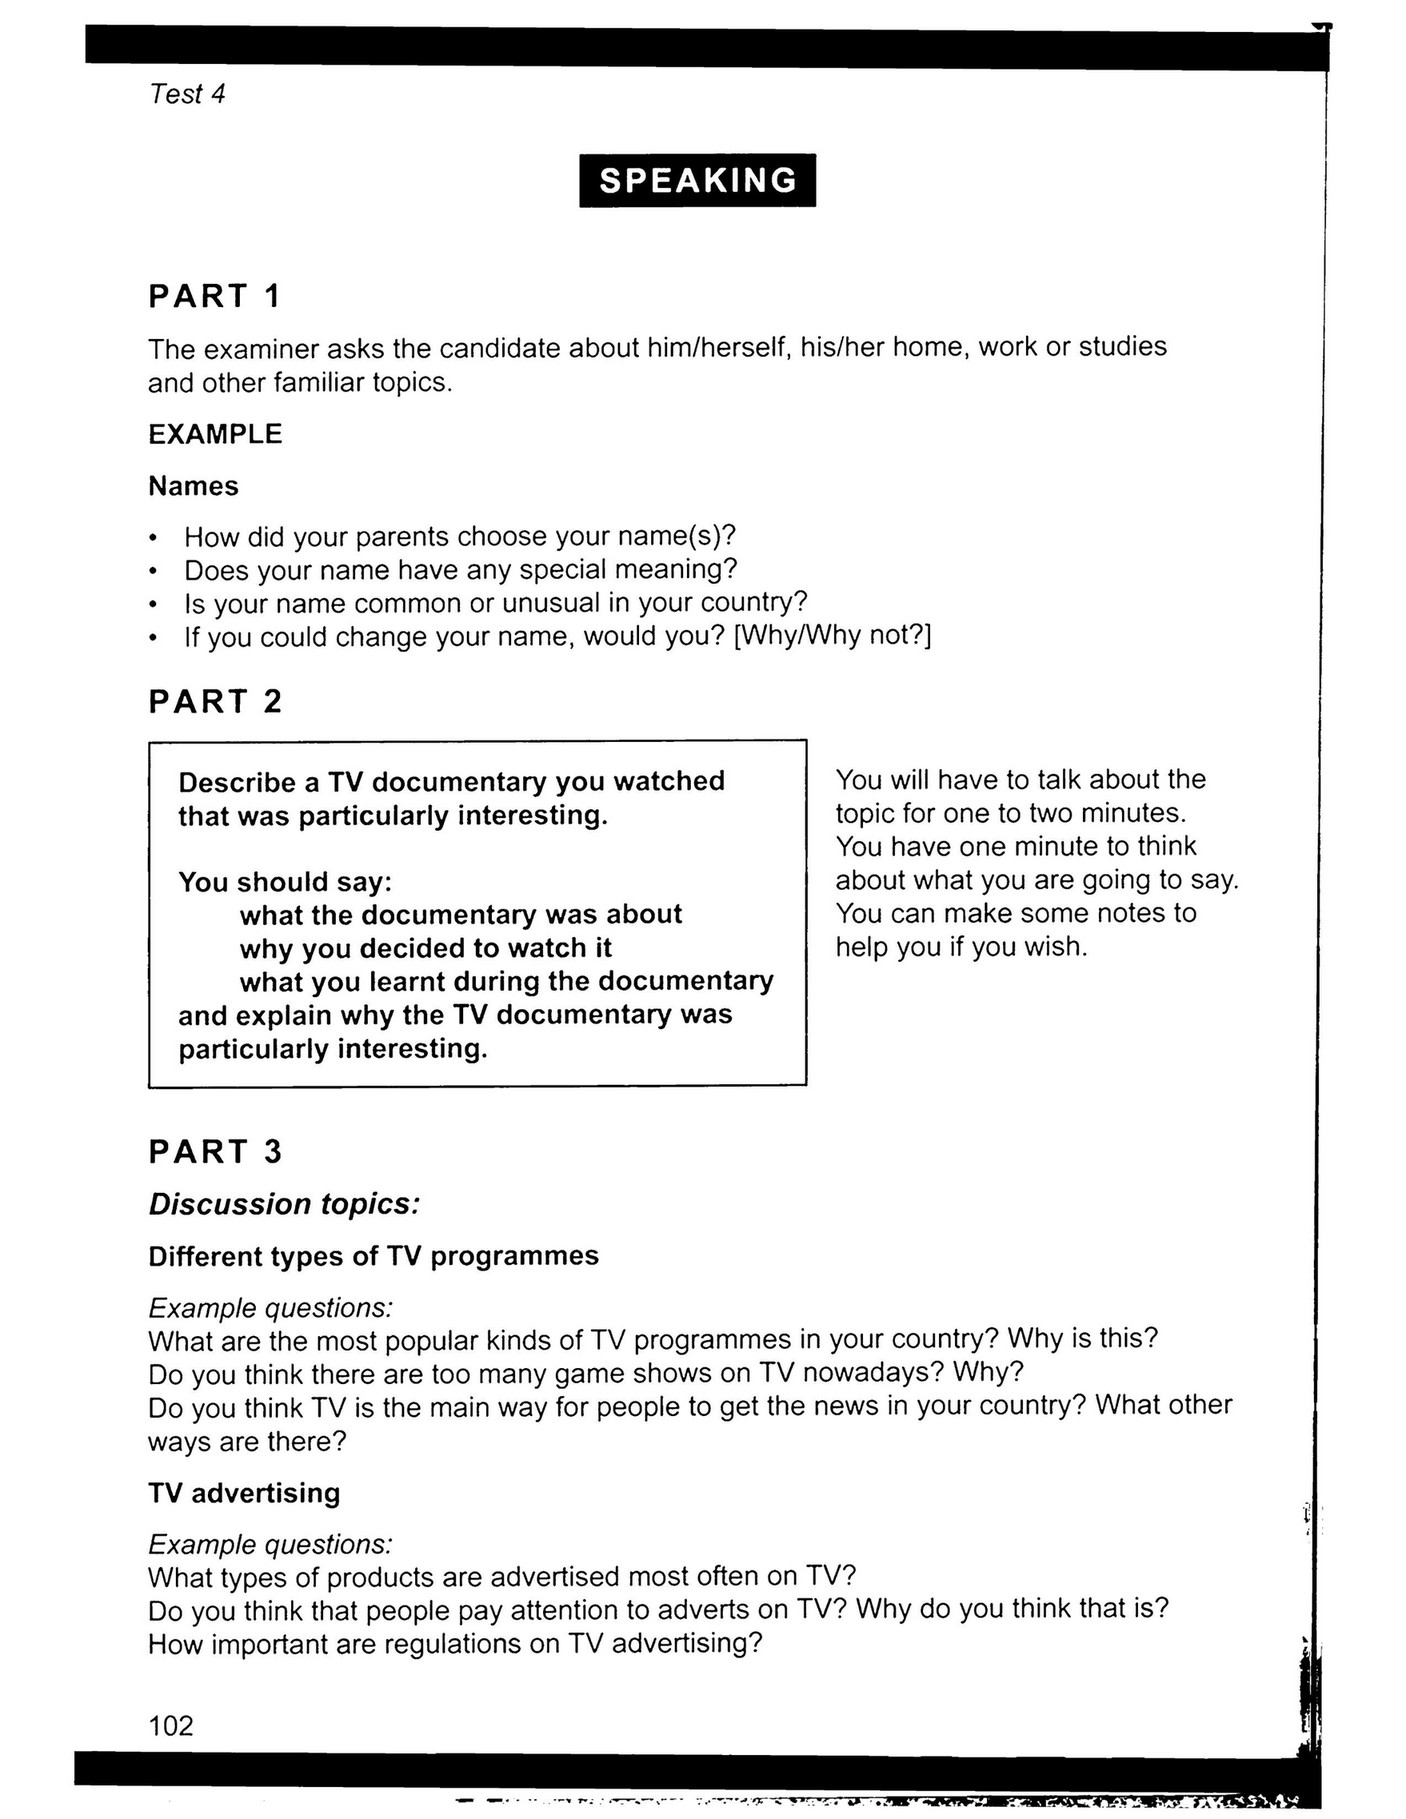 Cambridge IELTS Academic 11 - Page 102-103 - Created with Publitas.com